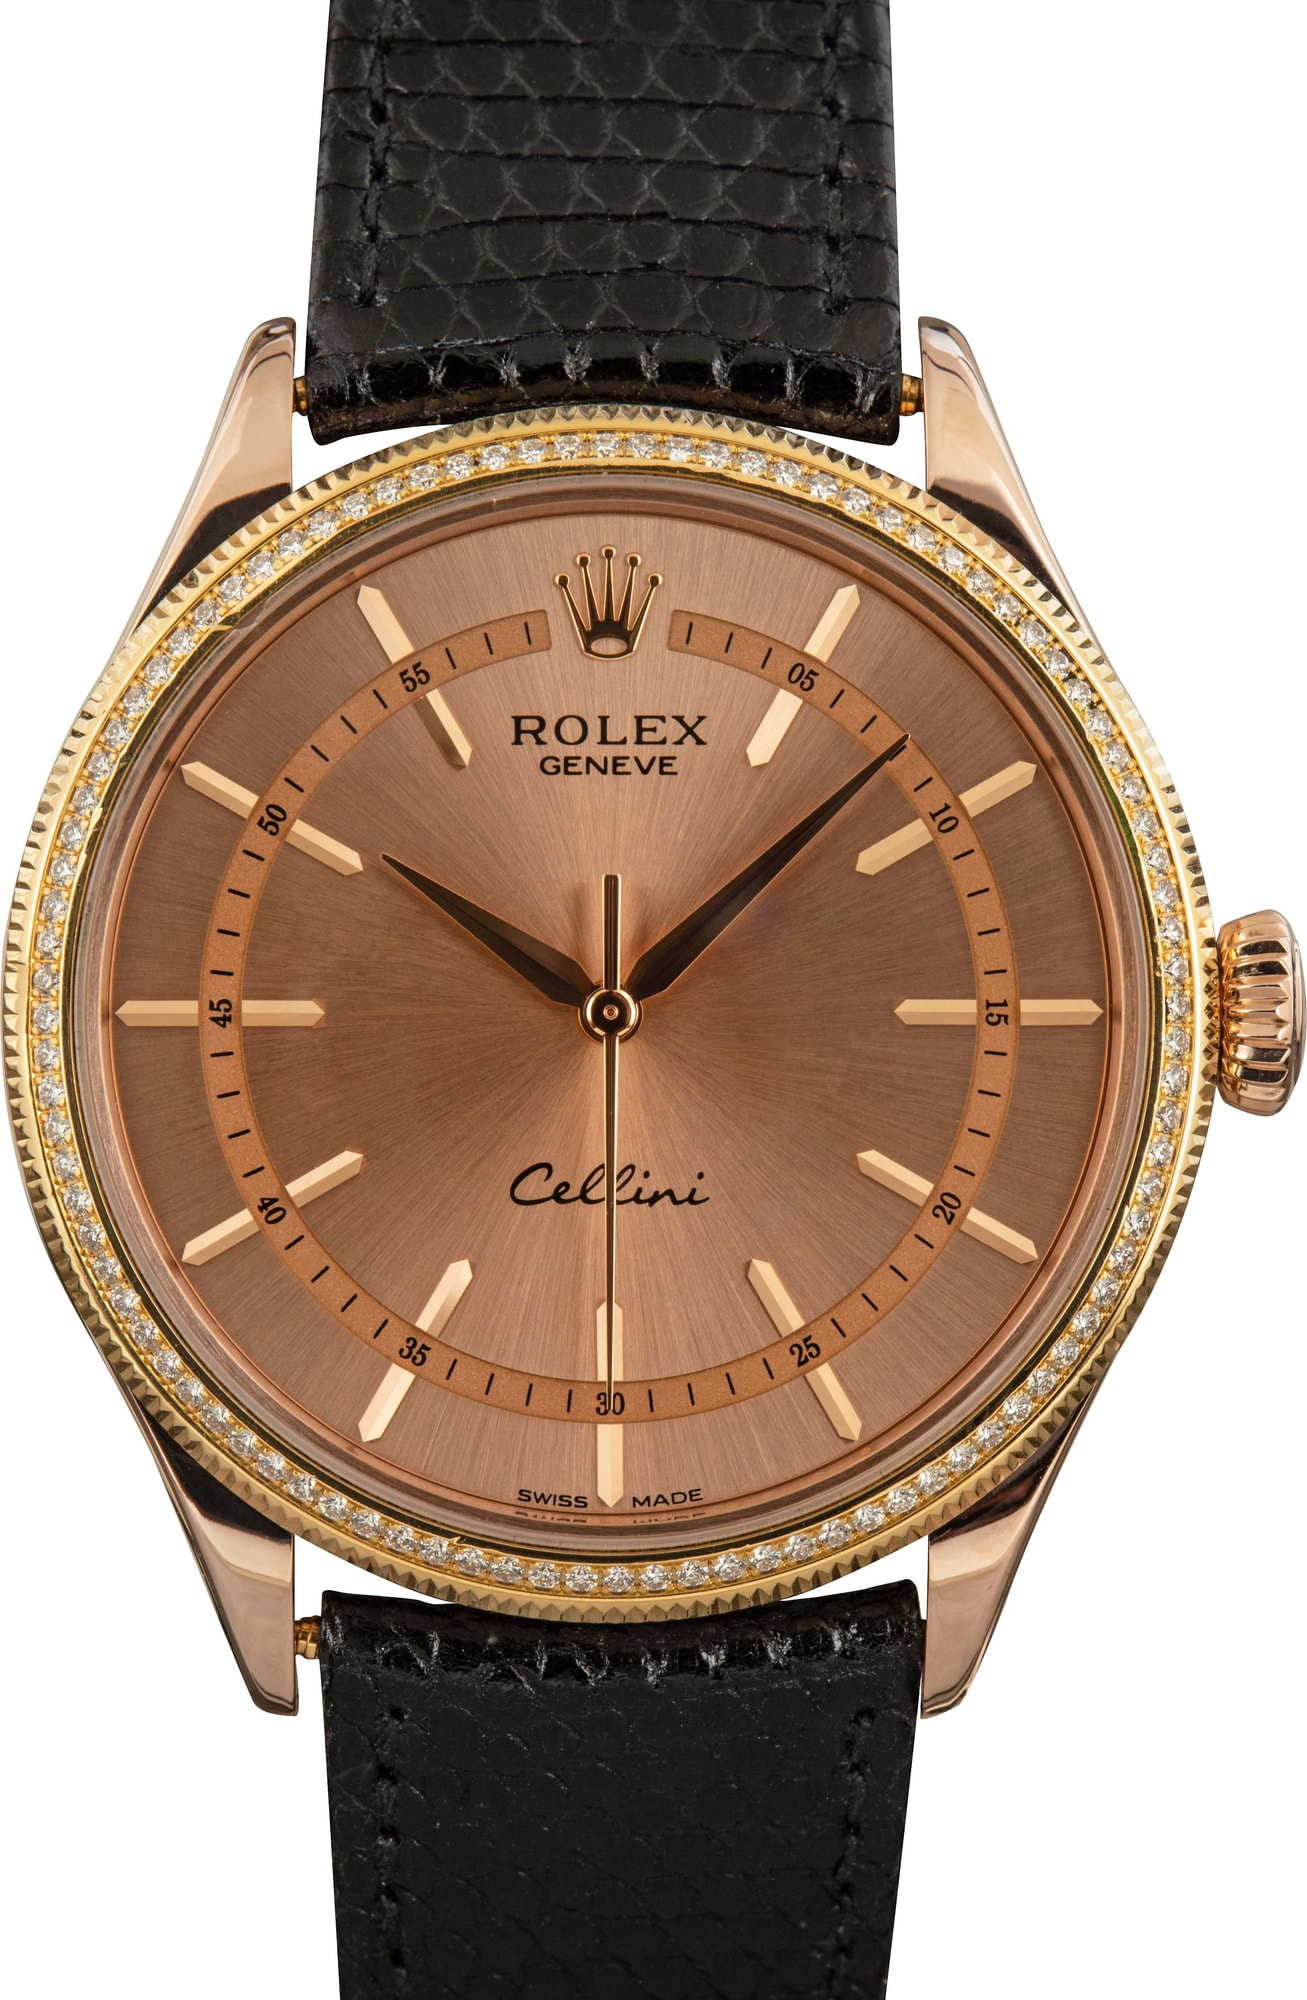 Rolex Cellini - BobsWatches.com